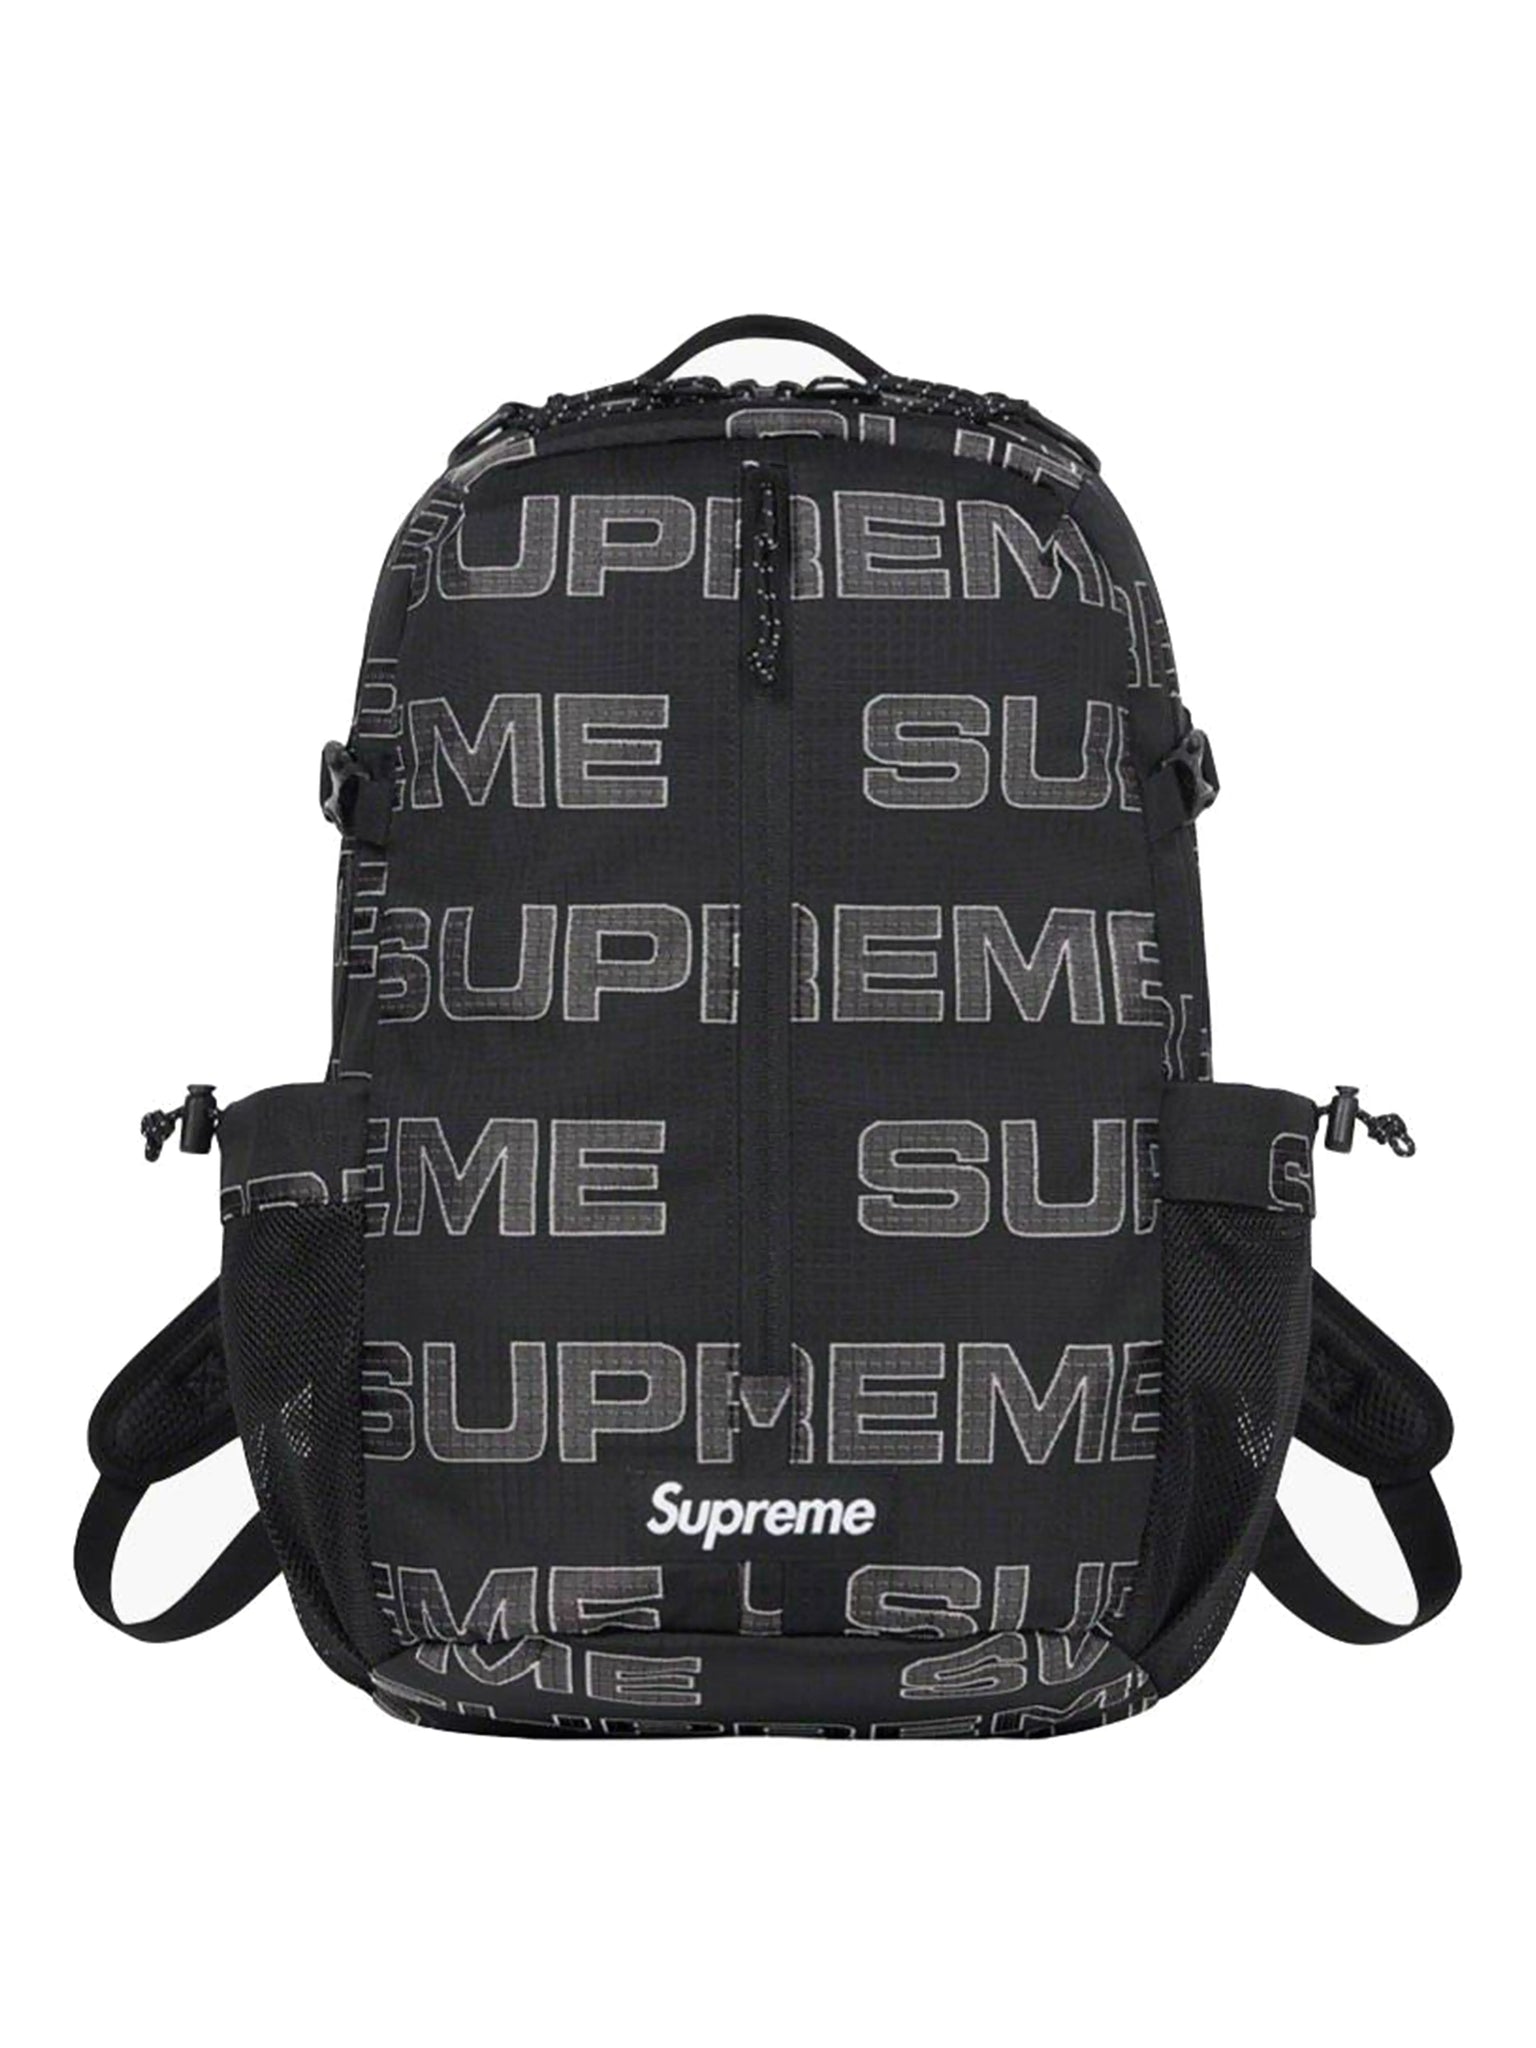 Supreme Backpack Black [FW21] Prior